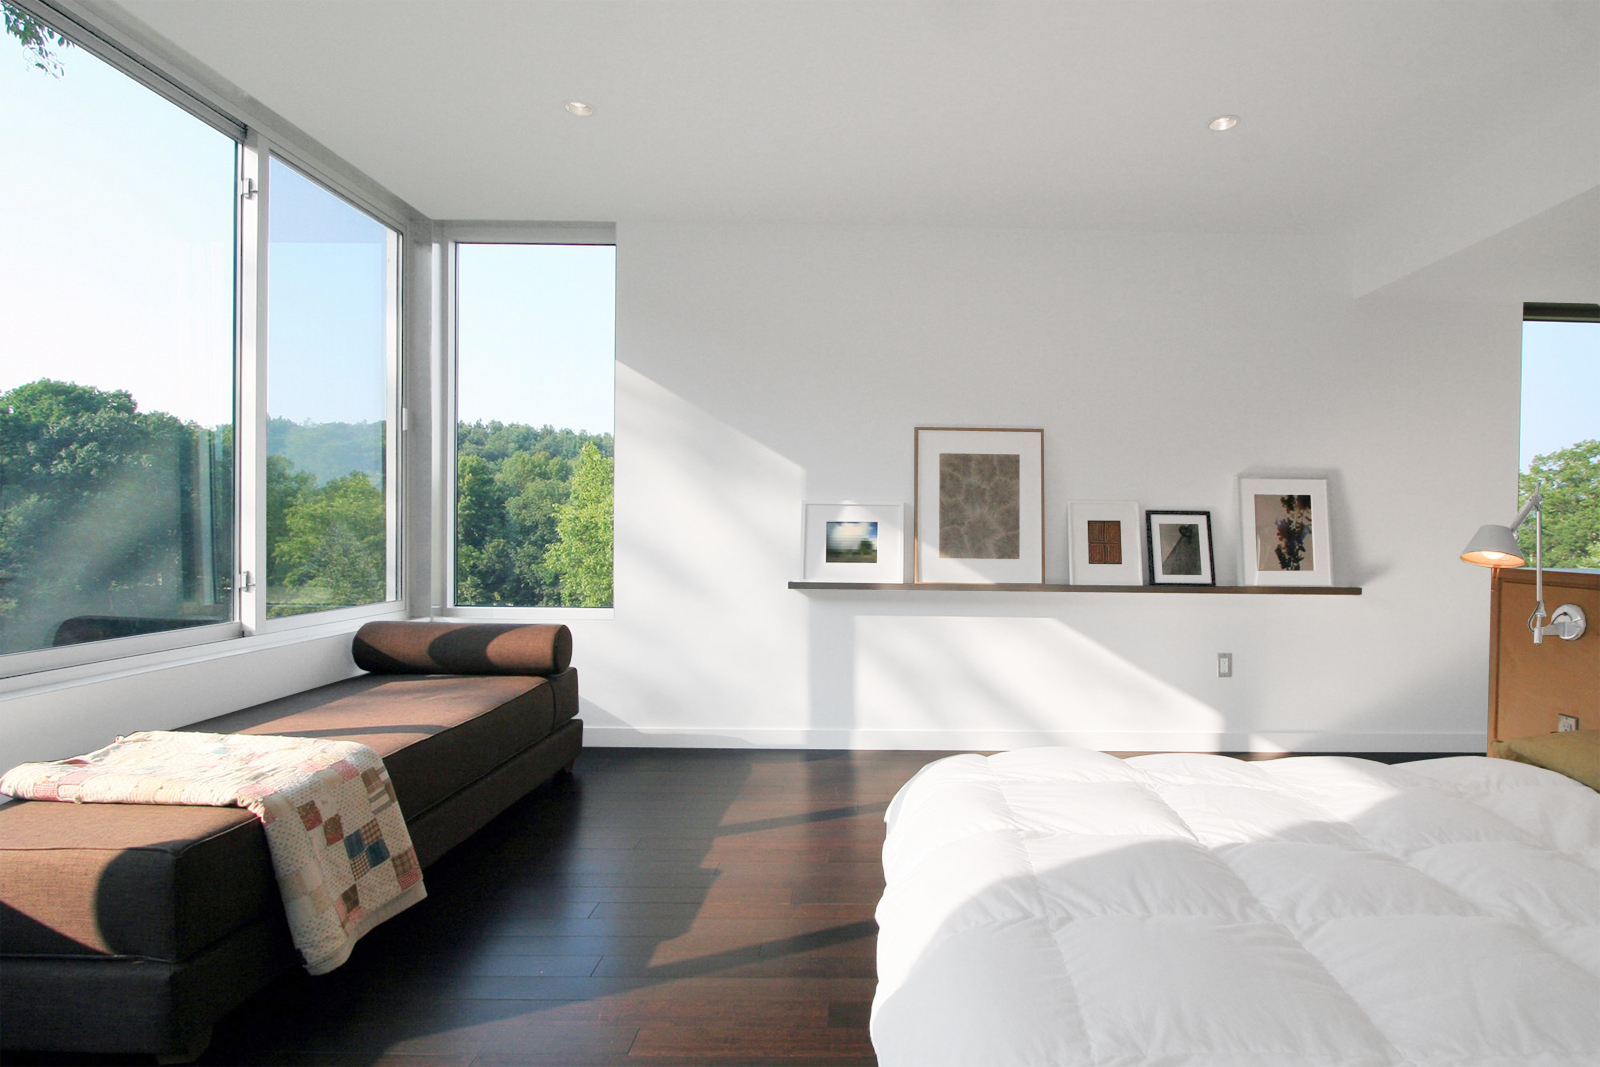 res4-resolution-4-architecture-modern-modular-house-prefab-home-house-on-sunset-ridge-bedroom-02.jpg